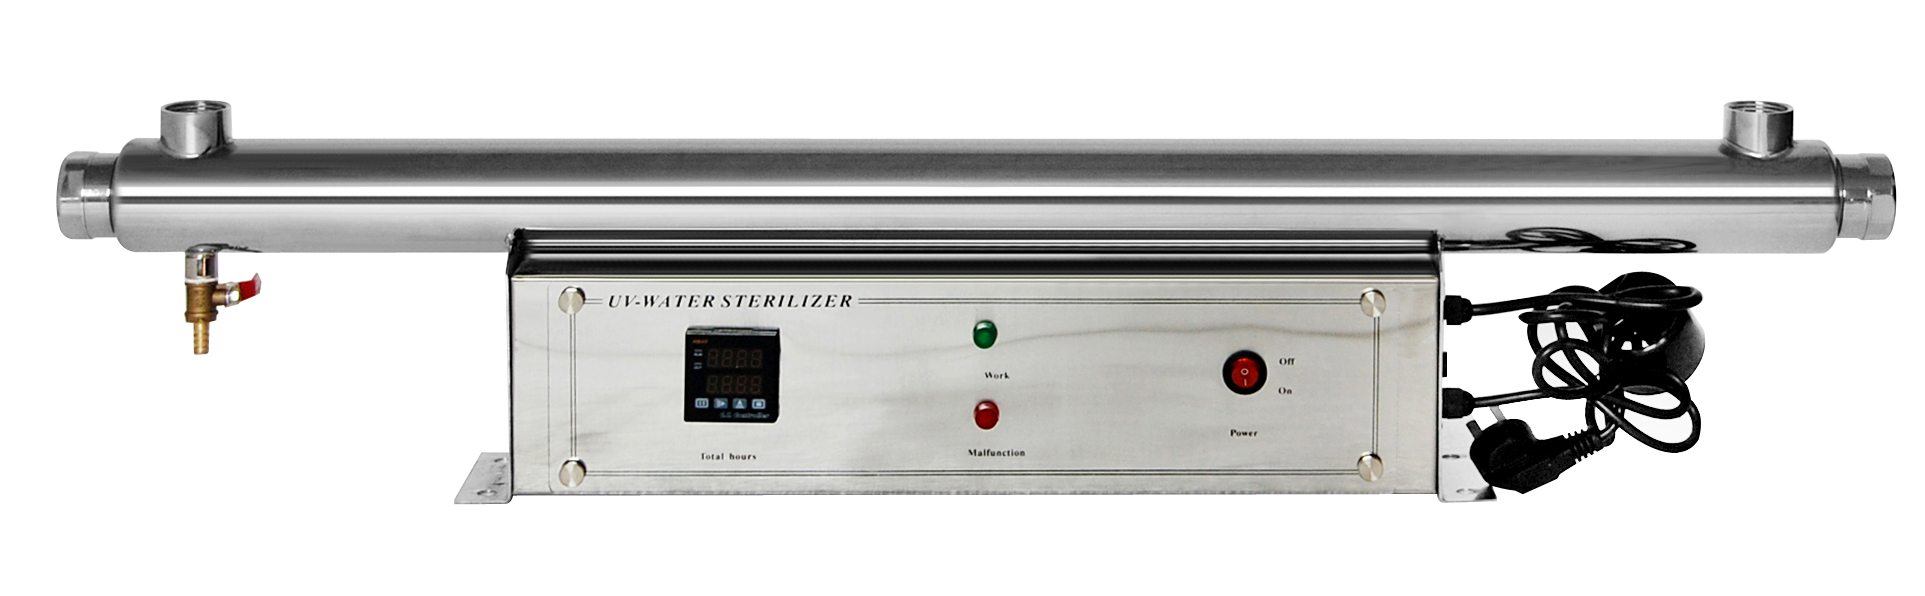 Stainless Steel UV Water Sterilizer 55W-T 